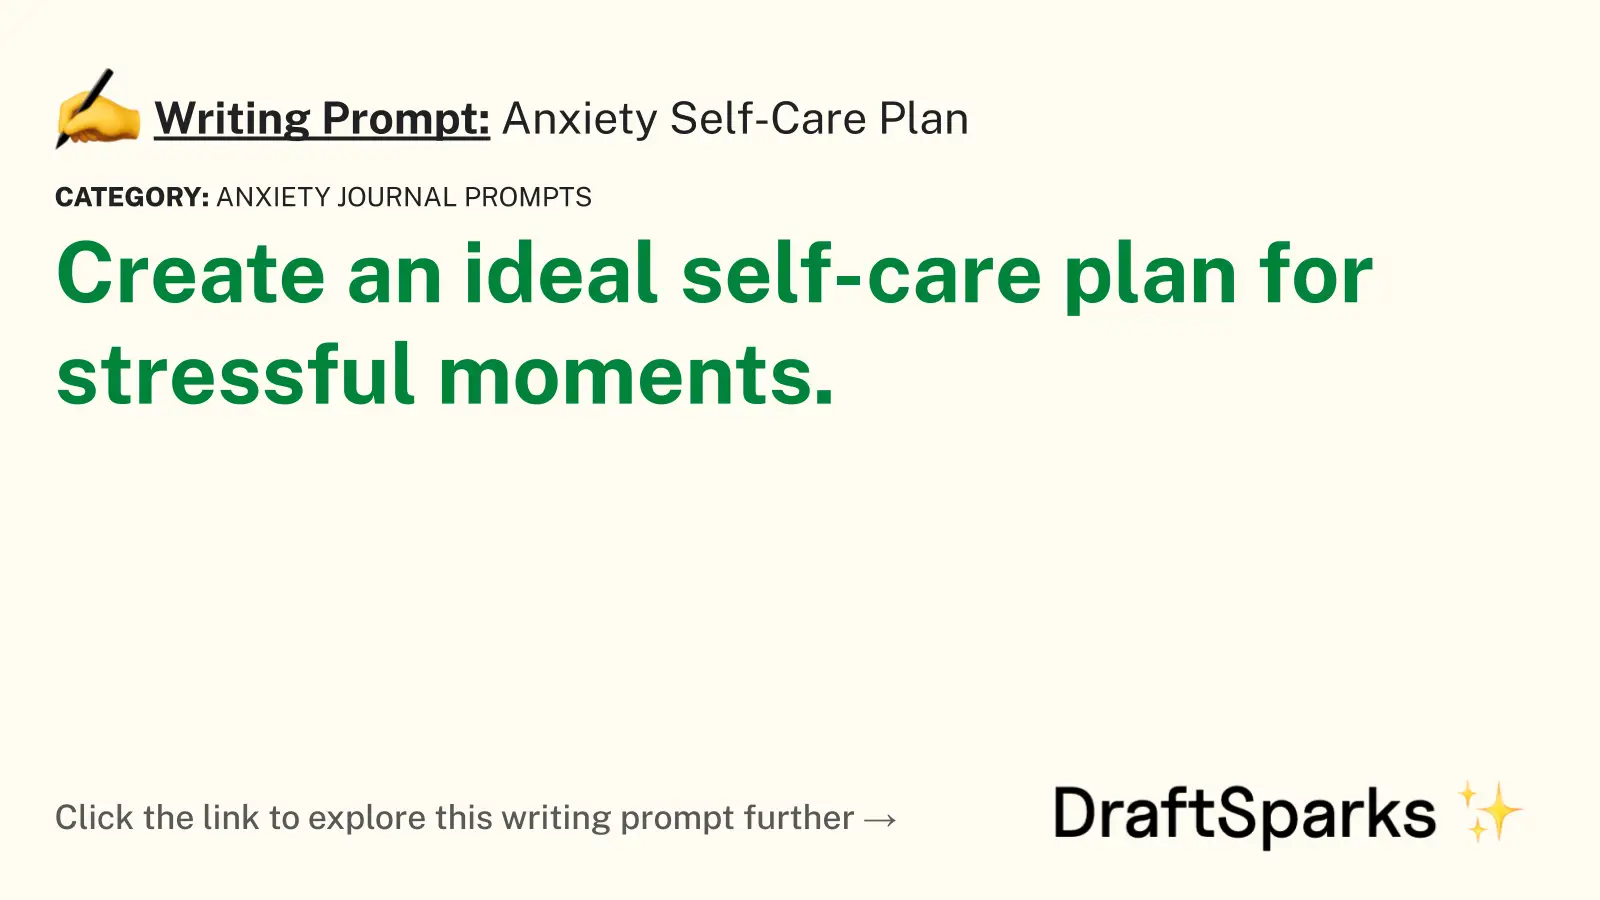 Anxiety Self-Care Plan